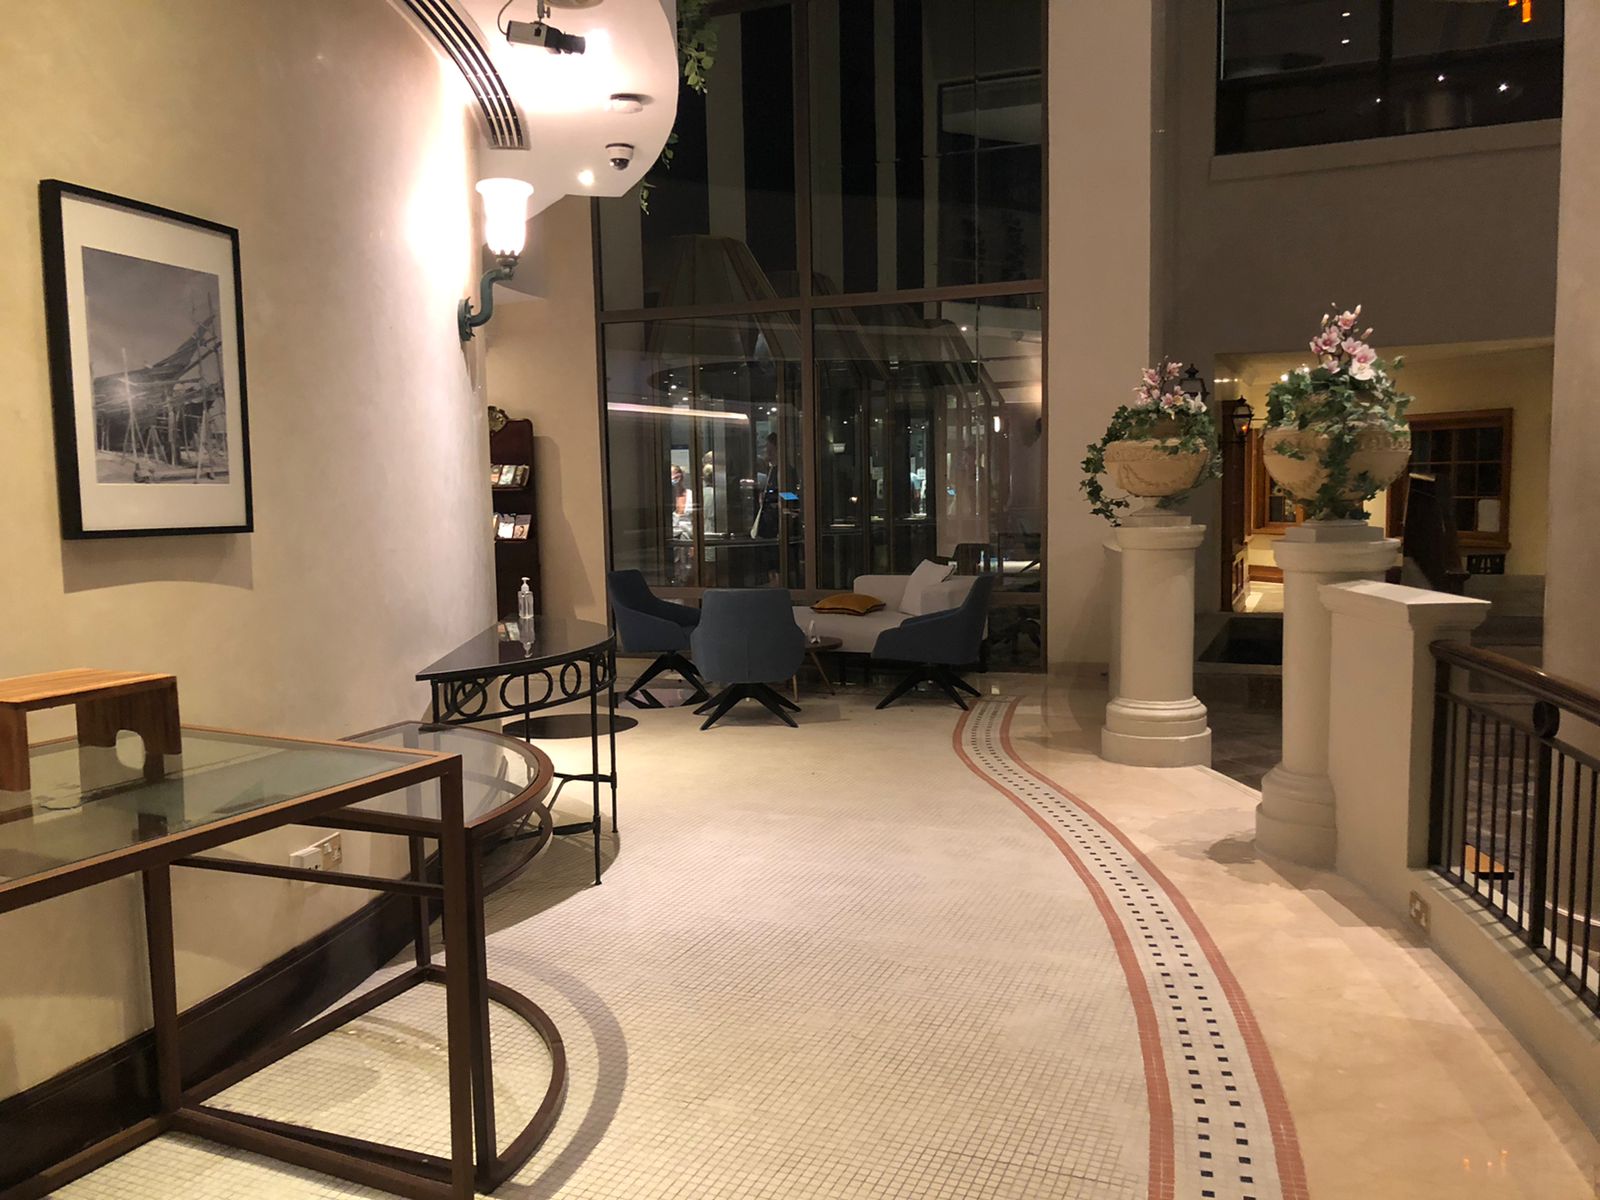 Radisson Blu Hotel & Resort, Abu Dhabi Corniche Club Lounge Entrance